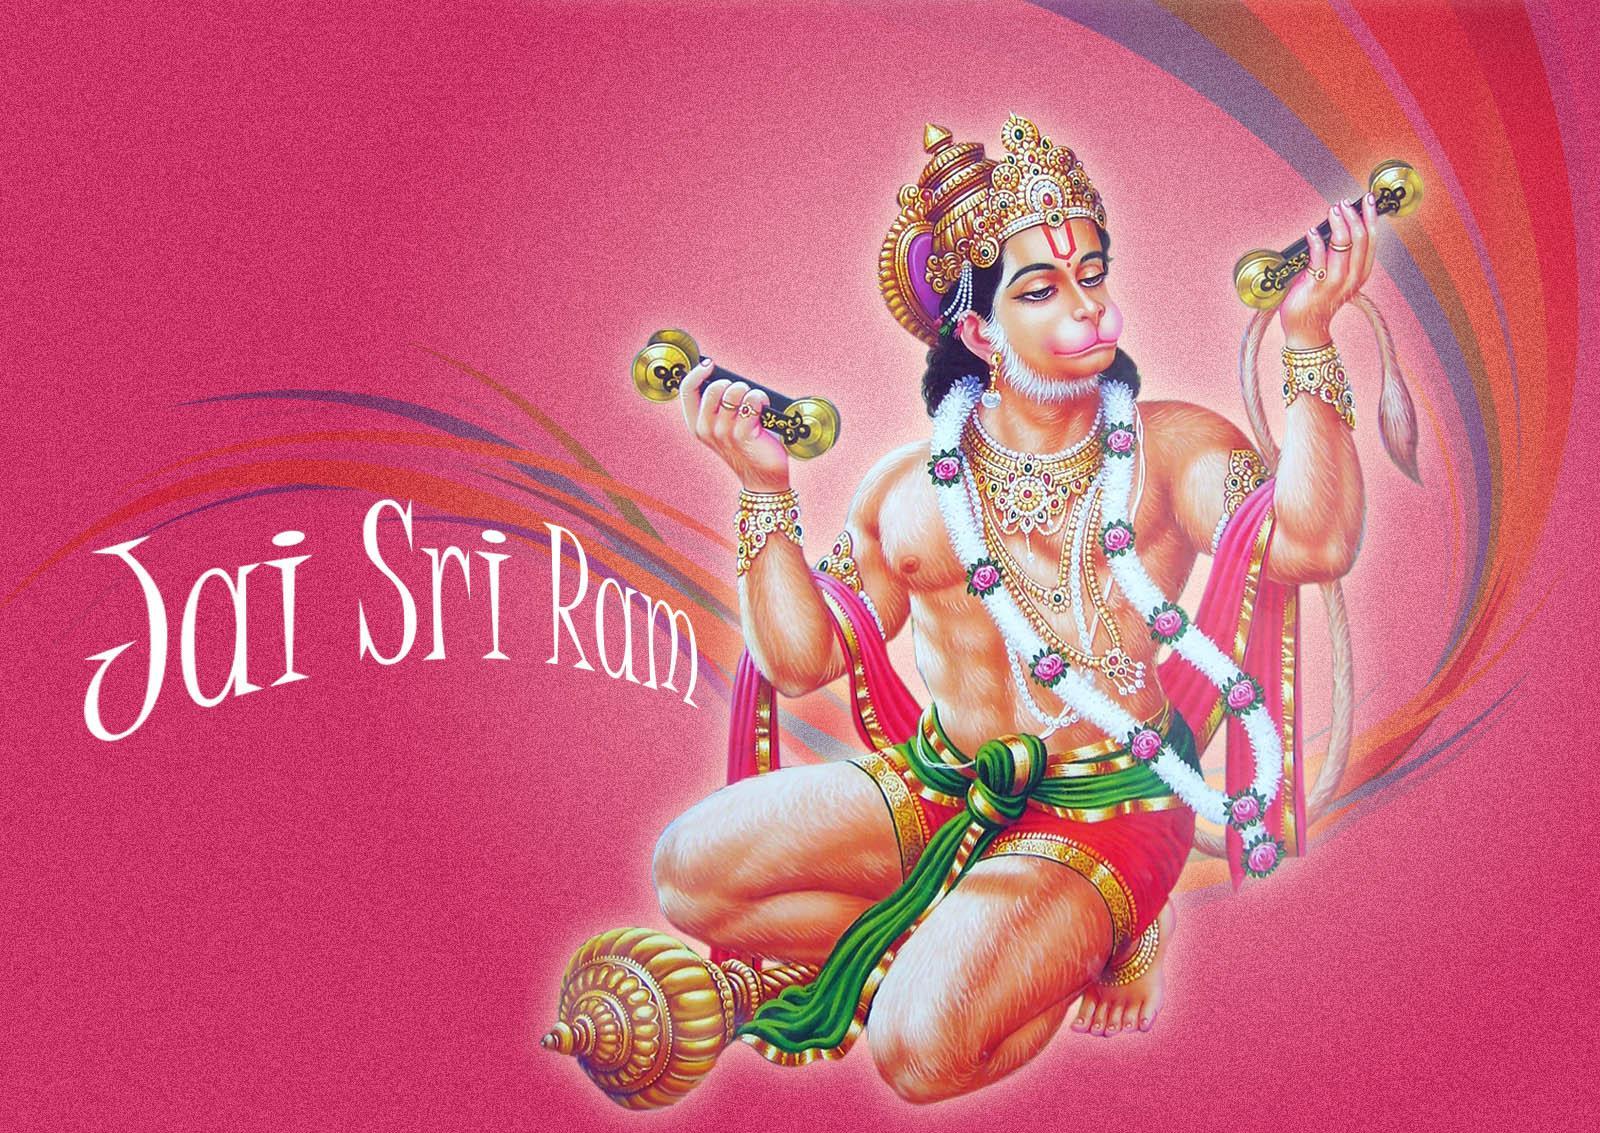 Festival Chaska: Jai Shree Ram Bhakt Hanuman Pictures, Images